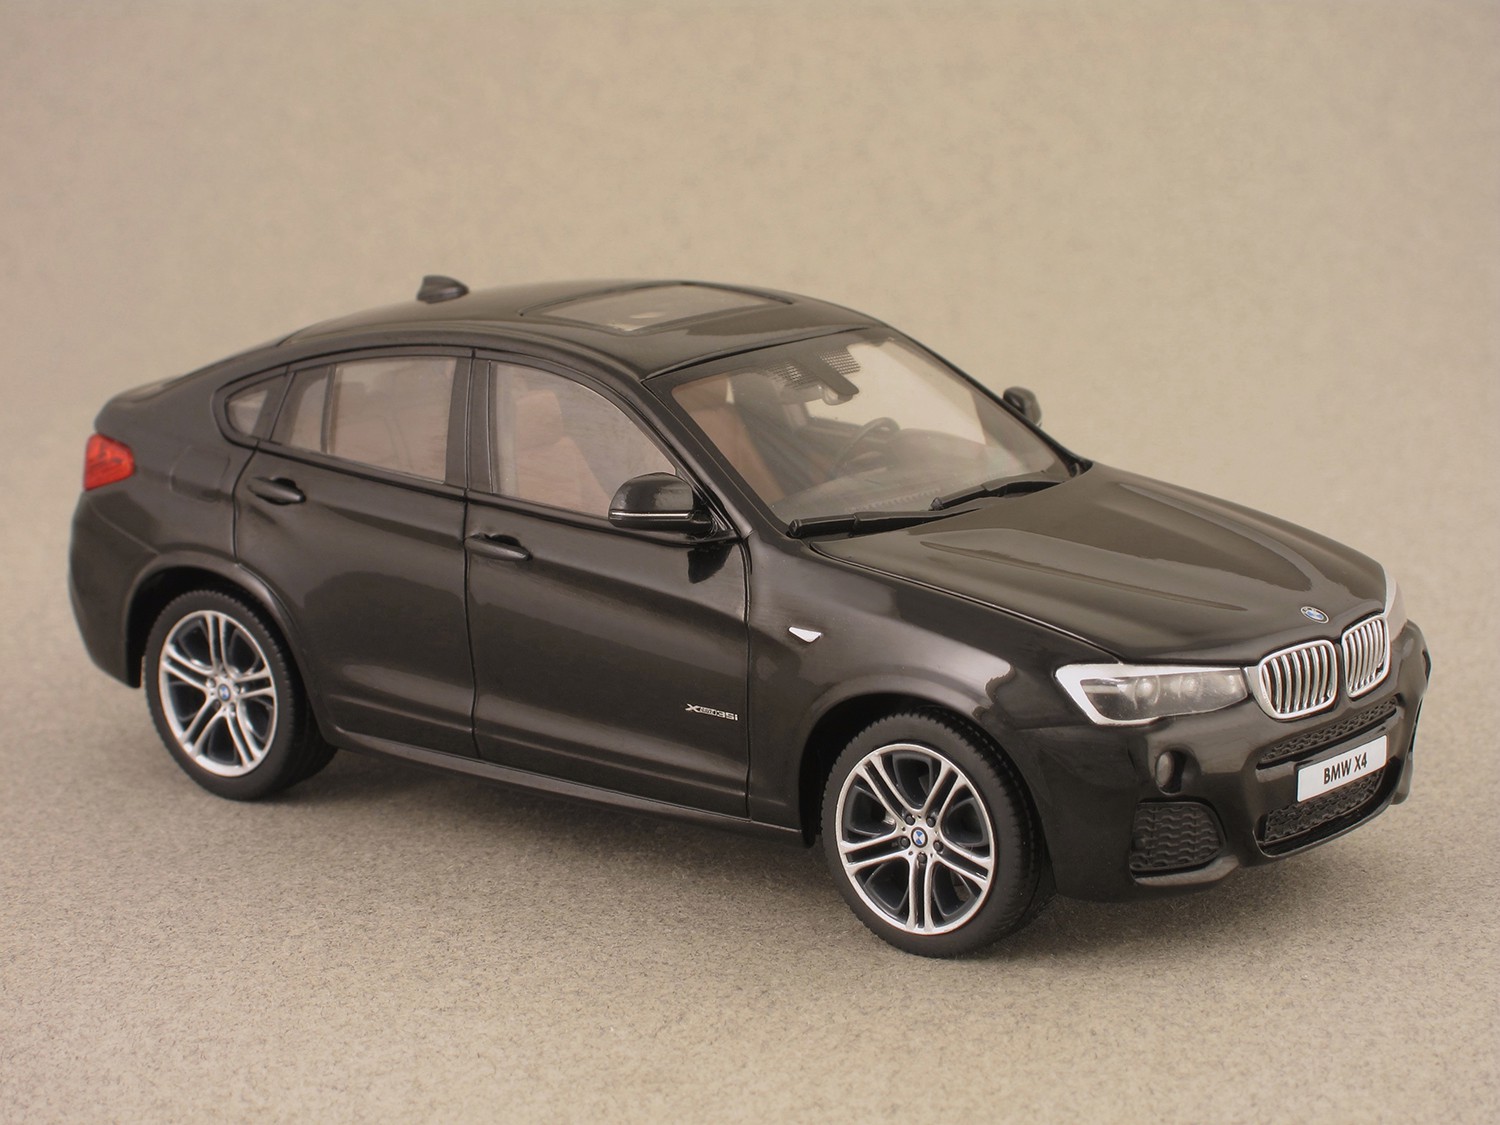 BMW X4 black (Herpa) 1:43